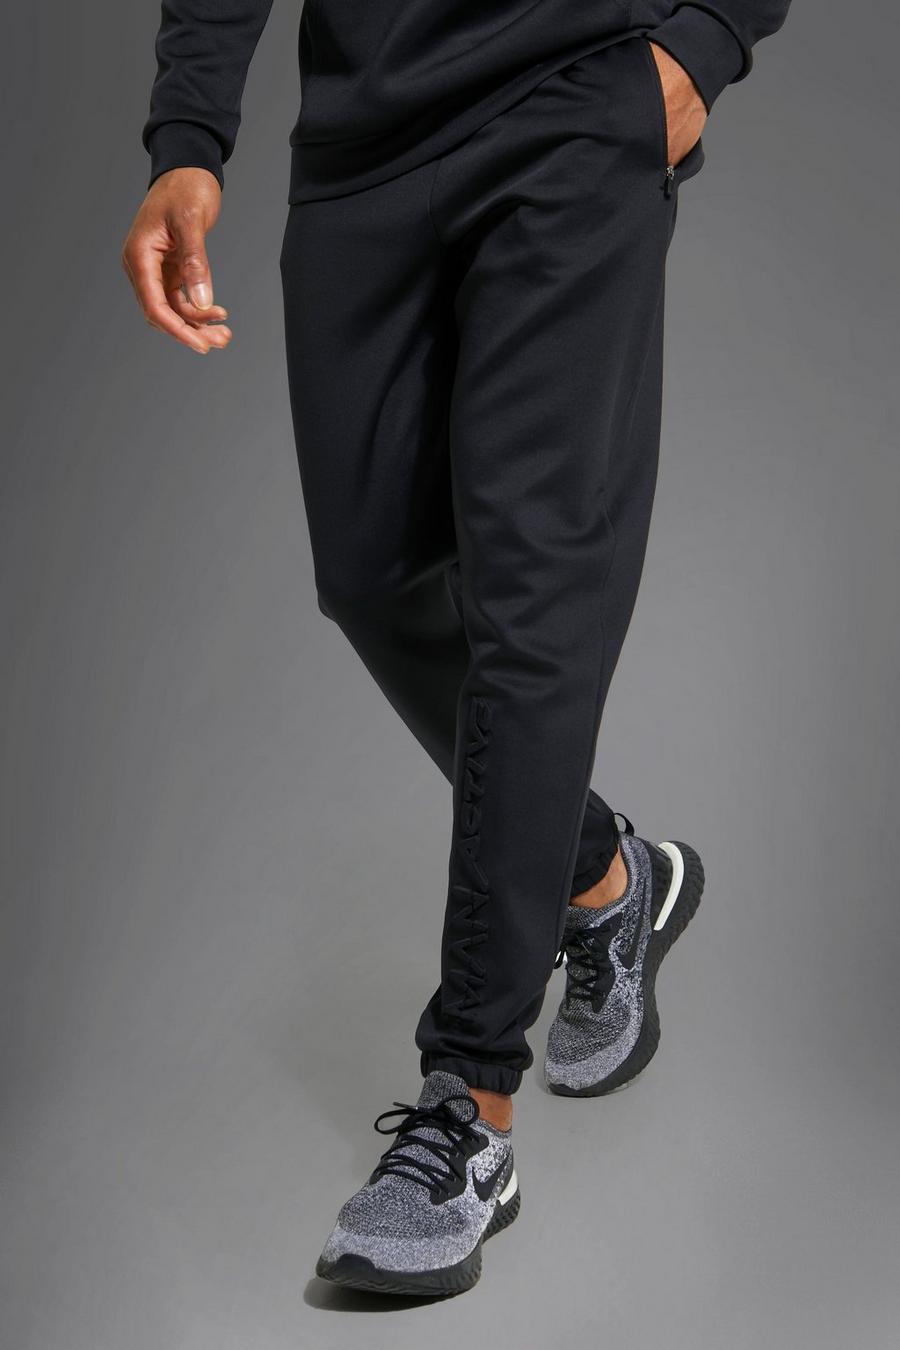 Black negro מכנסי ריצה ספורטיביים מבד סקובה עם כיתוב Man בתבליט